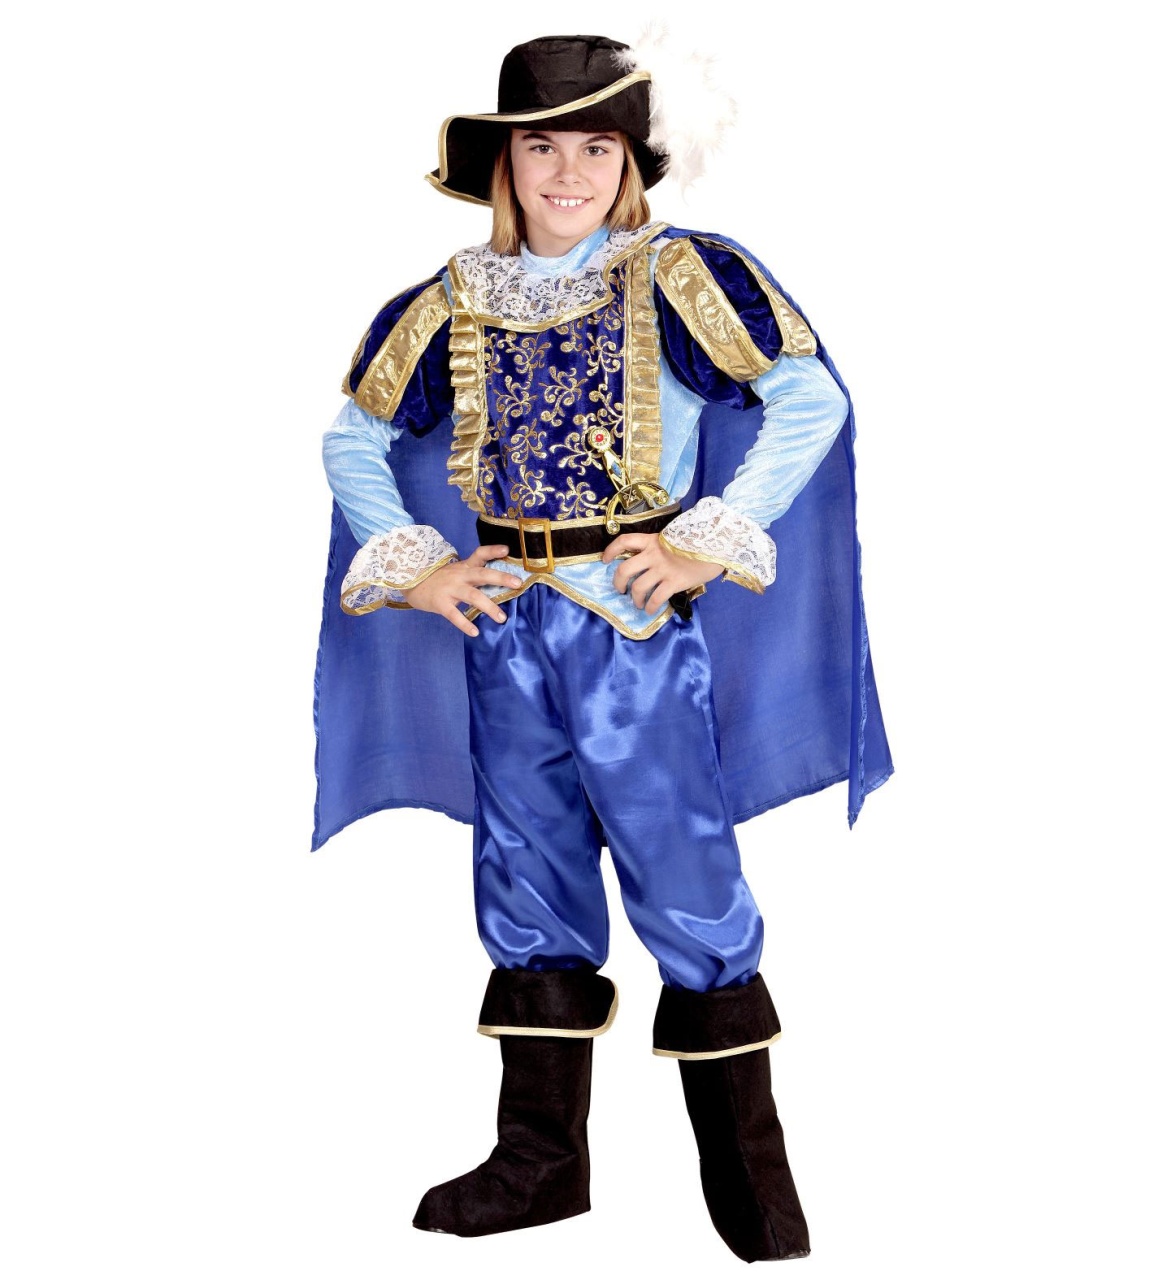 Kostüm Charming Prinz blau Gr. 128 5-7 Jahre Kinderkostüm